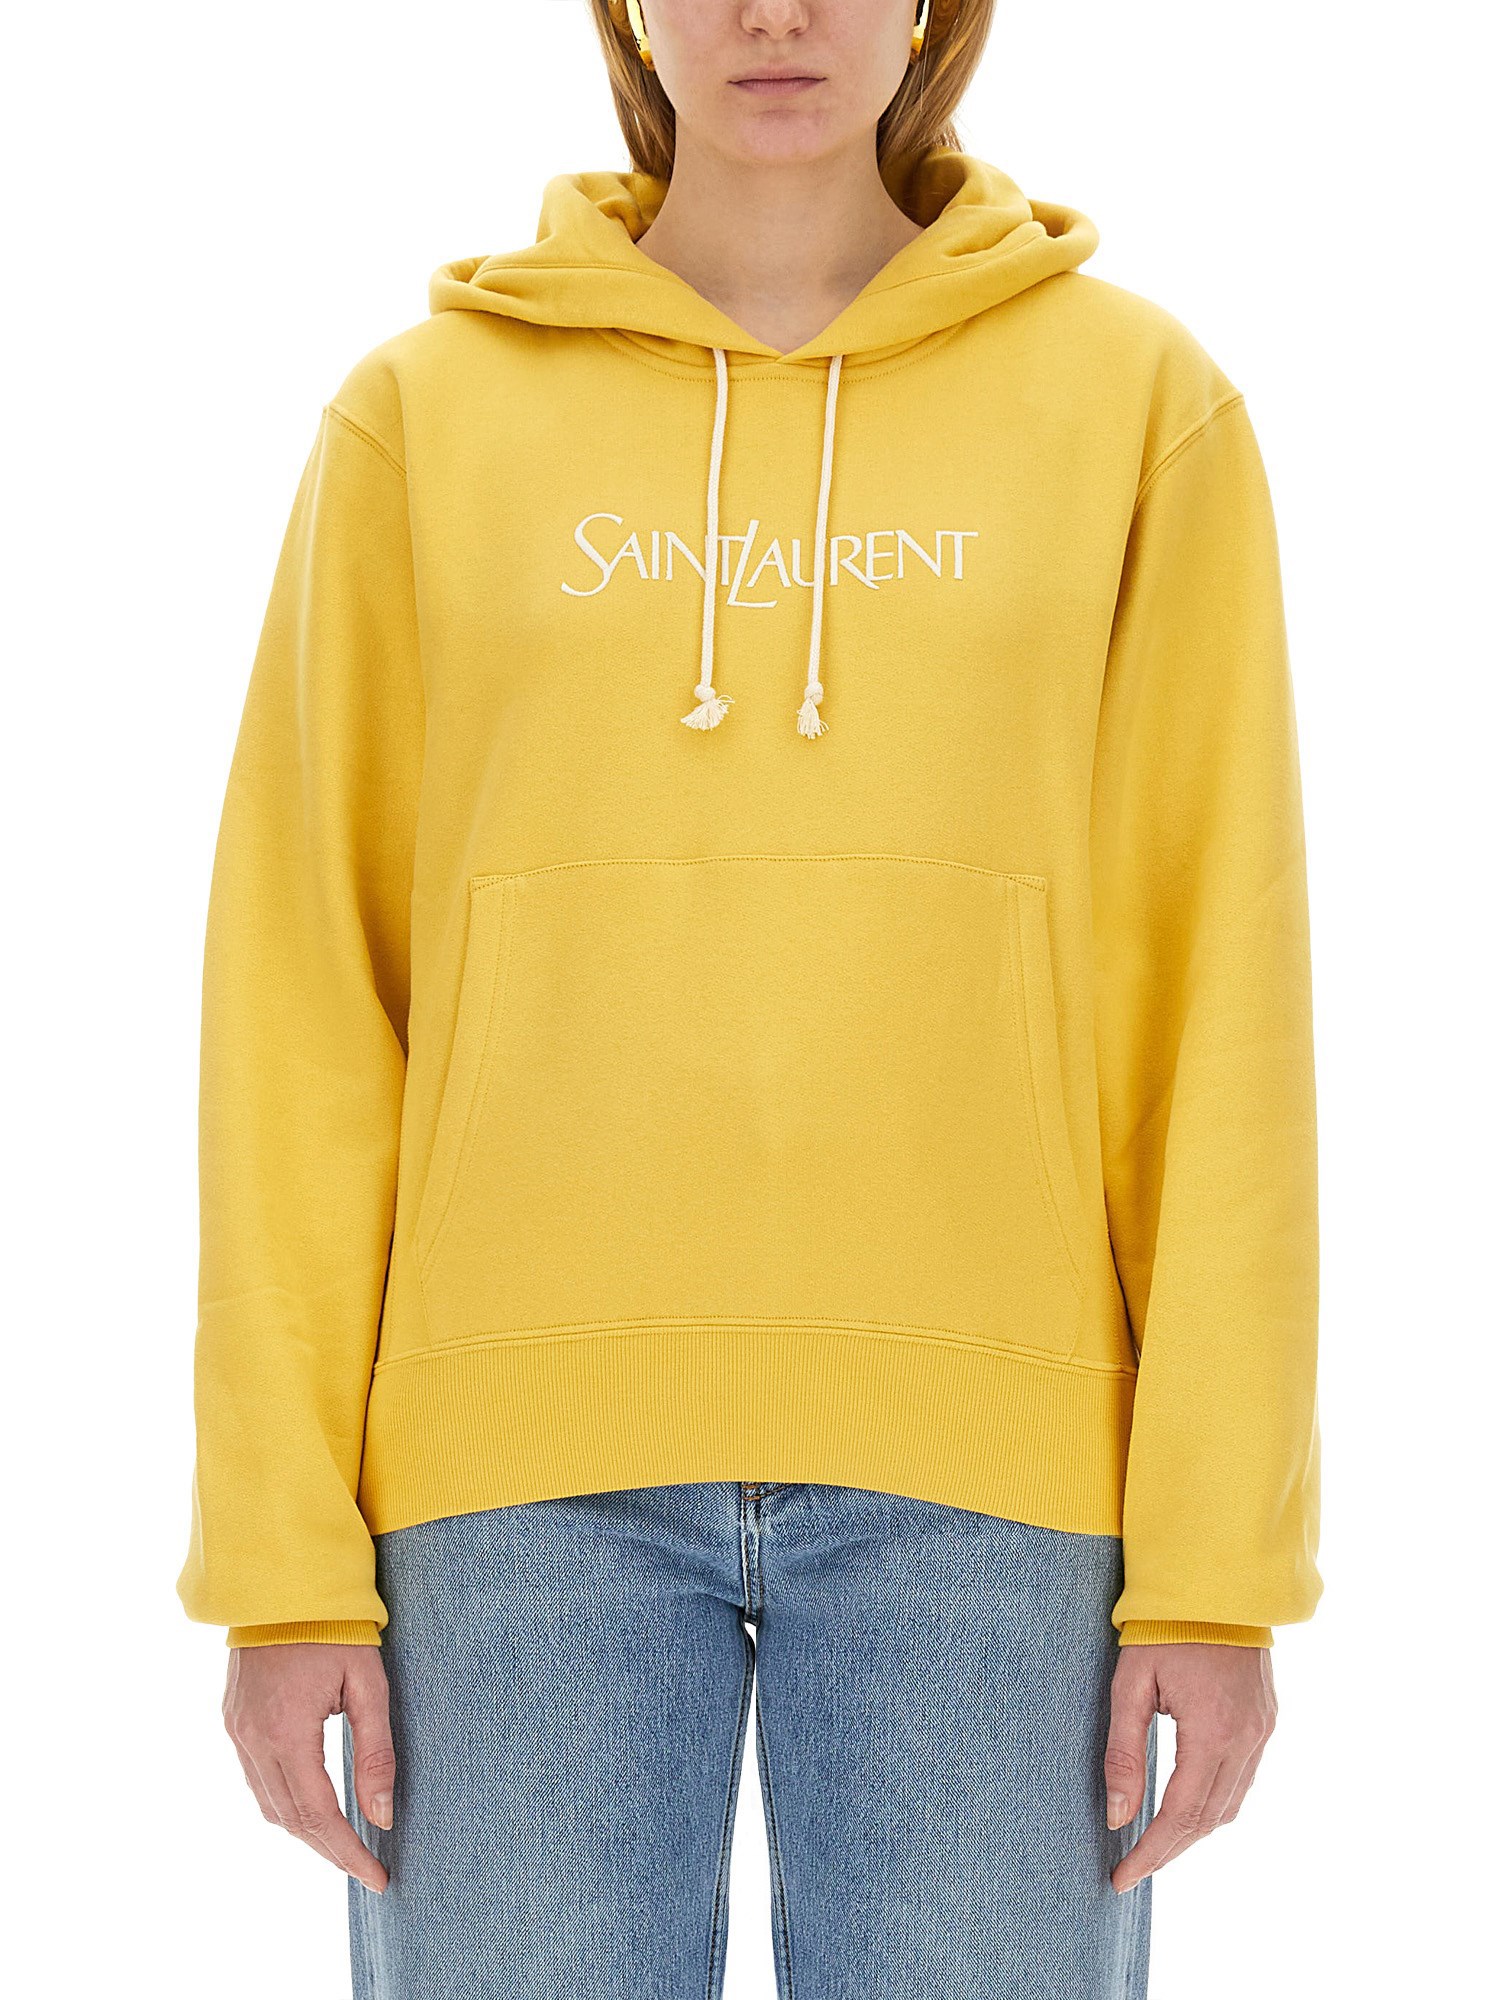 Saint Laurent saint laurent sweatshirt with logo